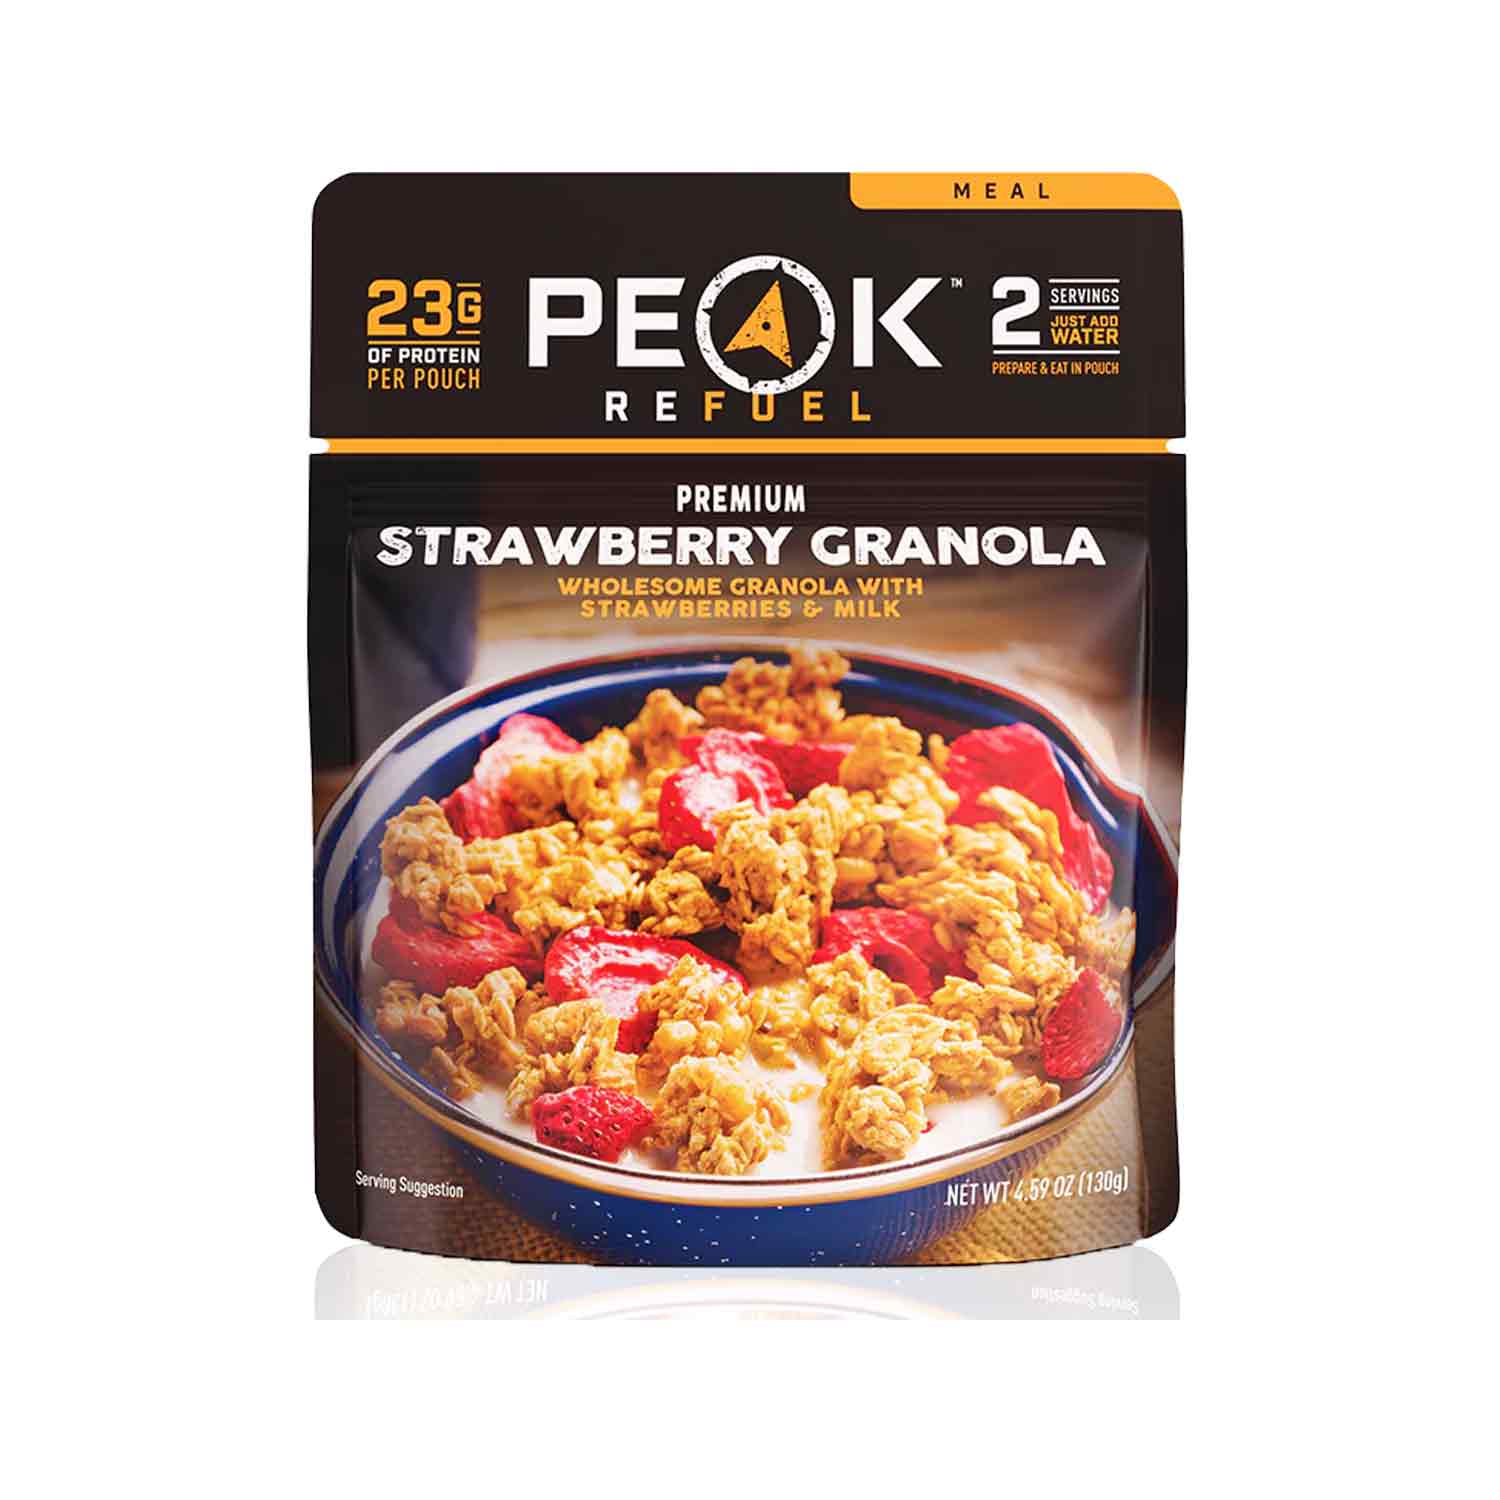 Peak Refuel Premium Freeze-Dried Granola Meal